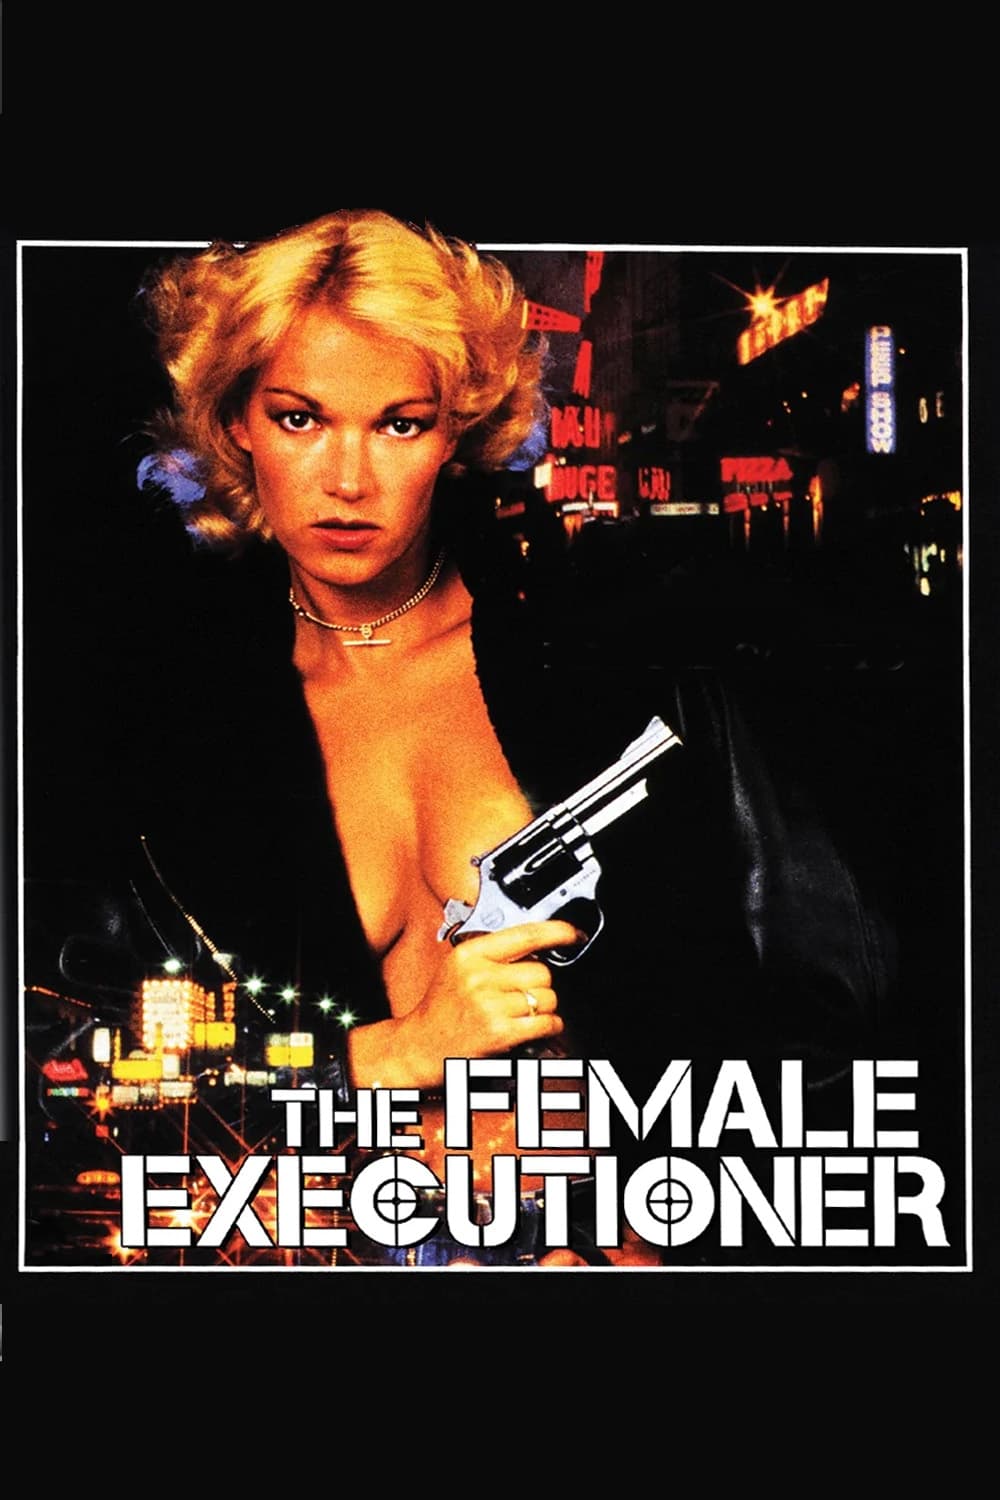 The Female Executioner